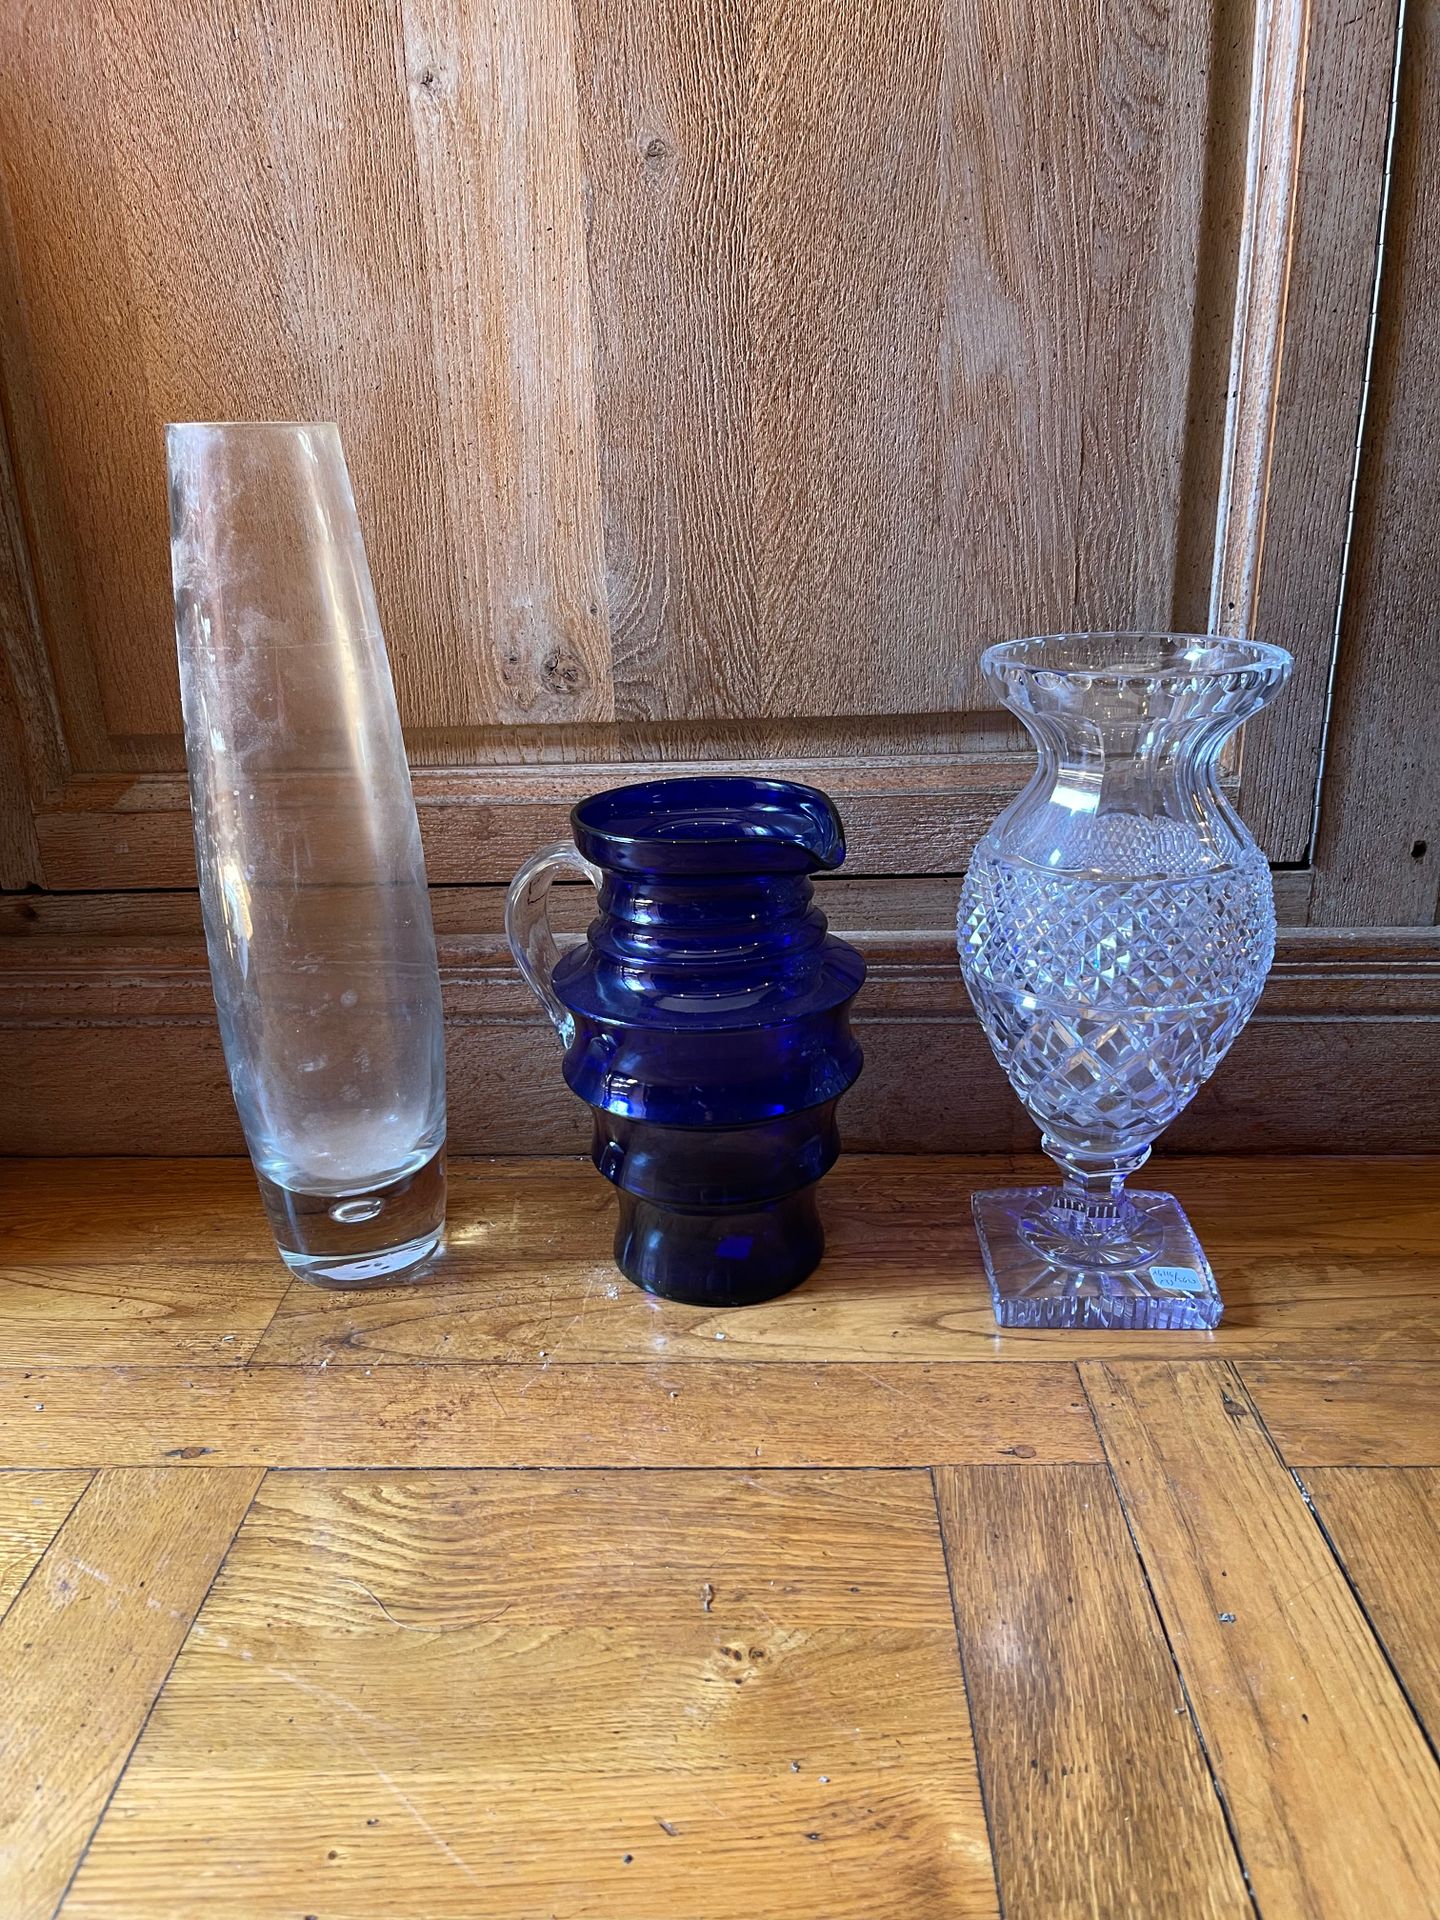 Null 拍品包括：一个方形底座的切割水晶花瓶，一个蓝色玻璃水壶，一个长方形的半透明花瓶